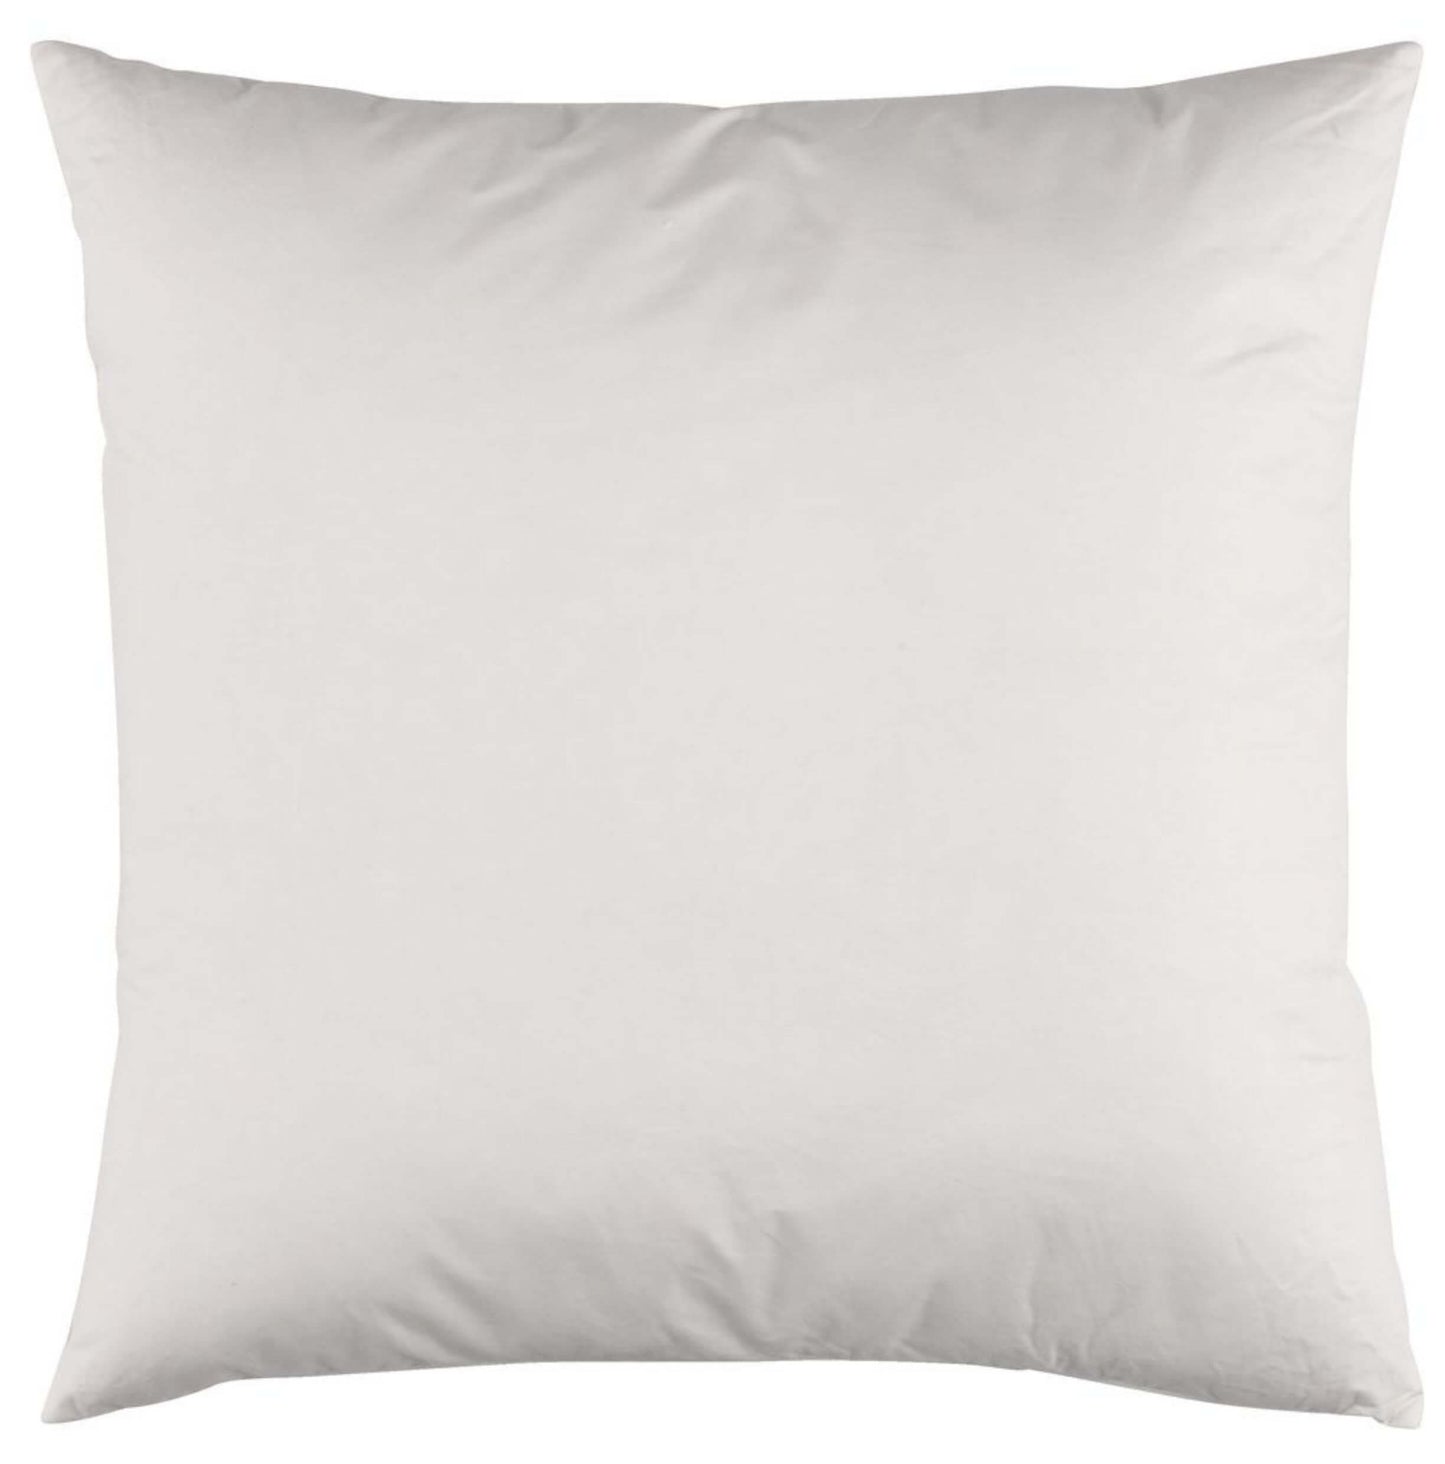 Decorative Jacquard Pillow Cover Gentlefox - Unik by Nature